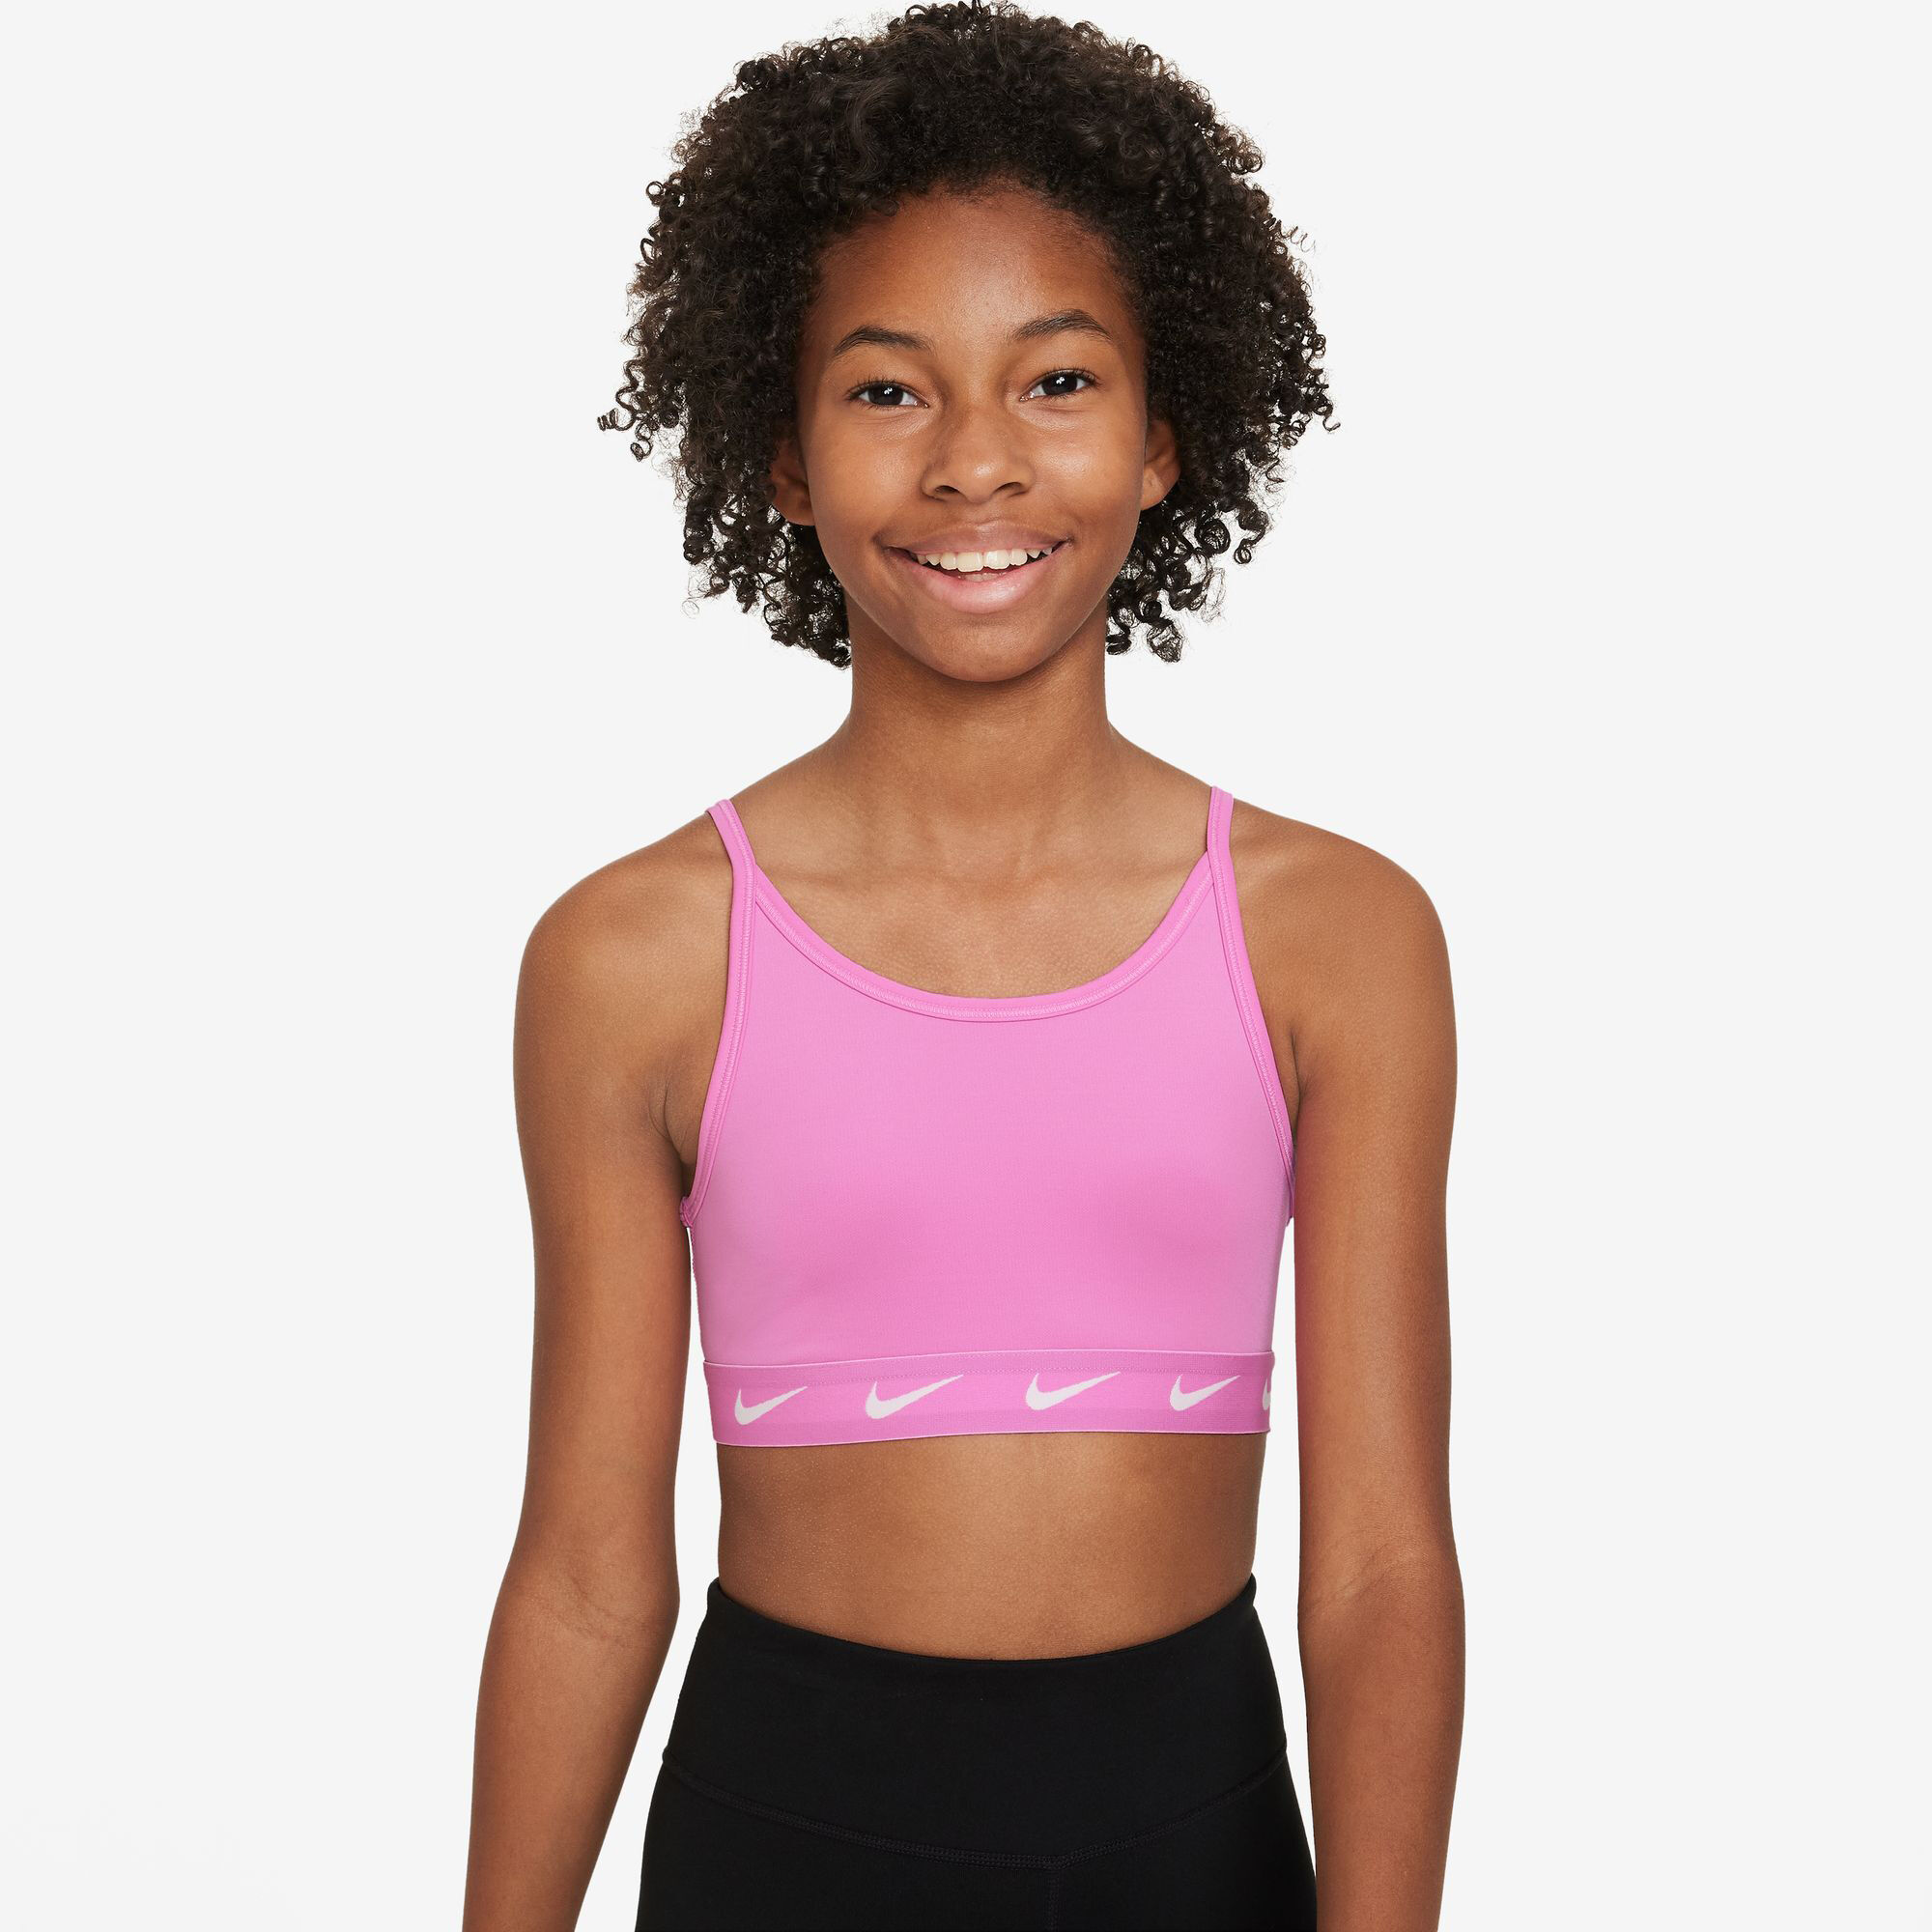 Girls' Pink Sports Bra for Teens and Tweens, Girls Activewear